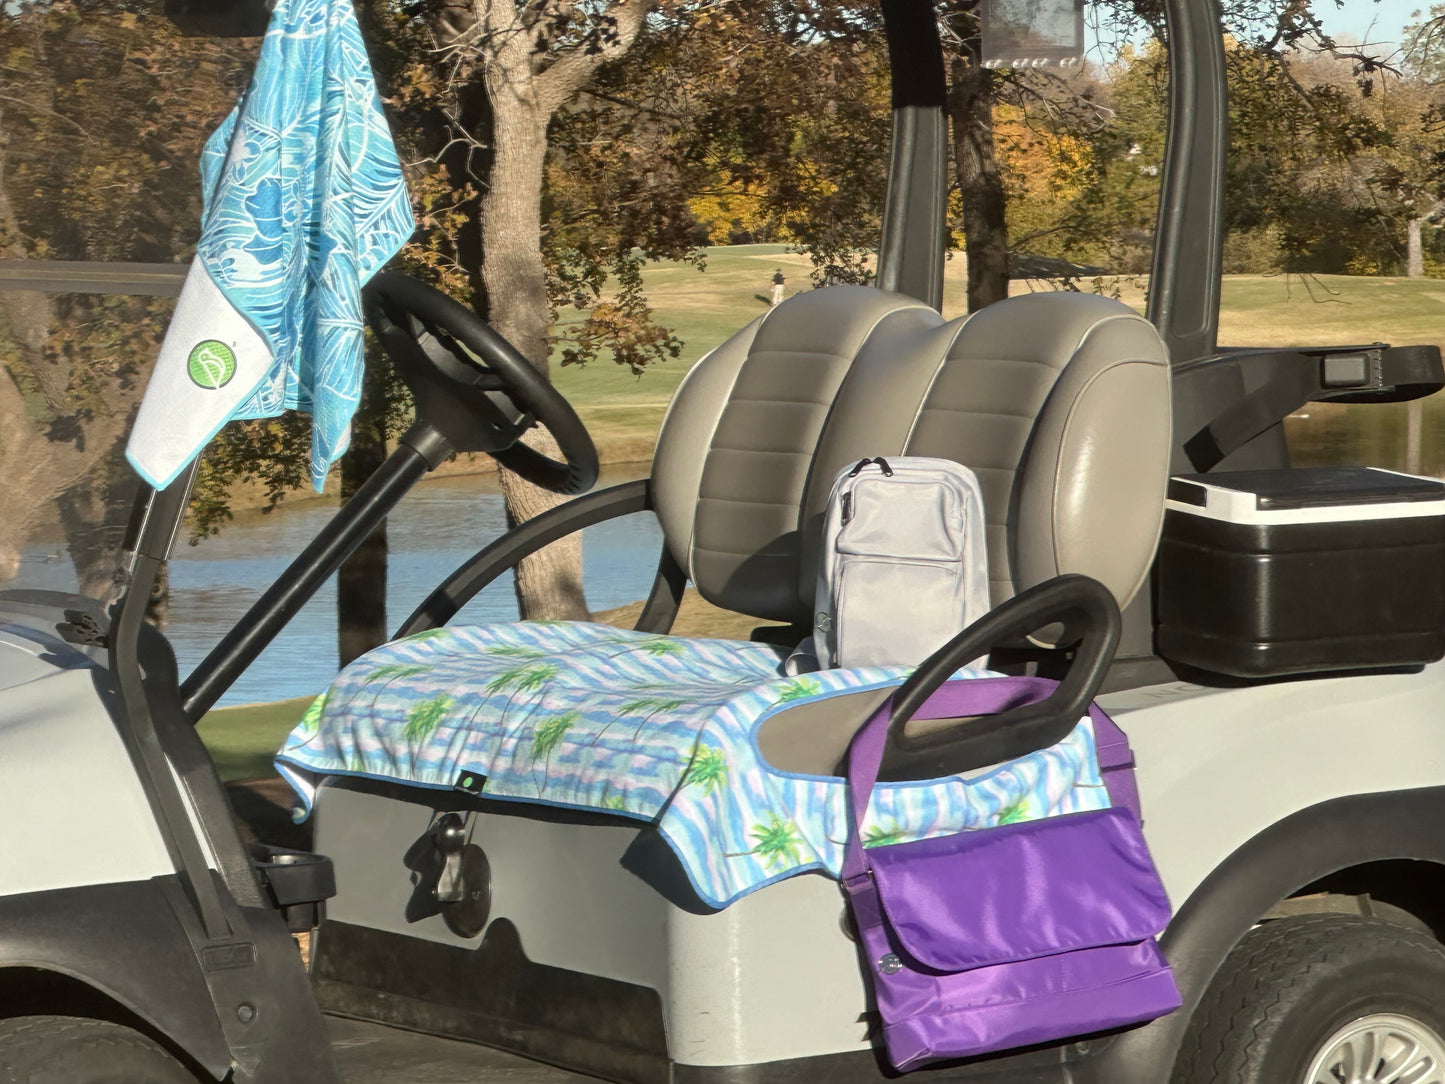 Golf Cart Saddle Bag Messenger Styling Purple Black Purple Diamond Print